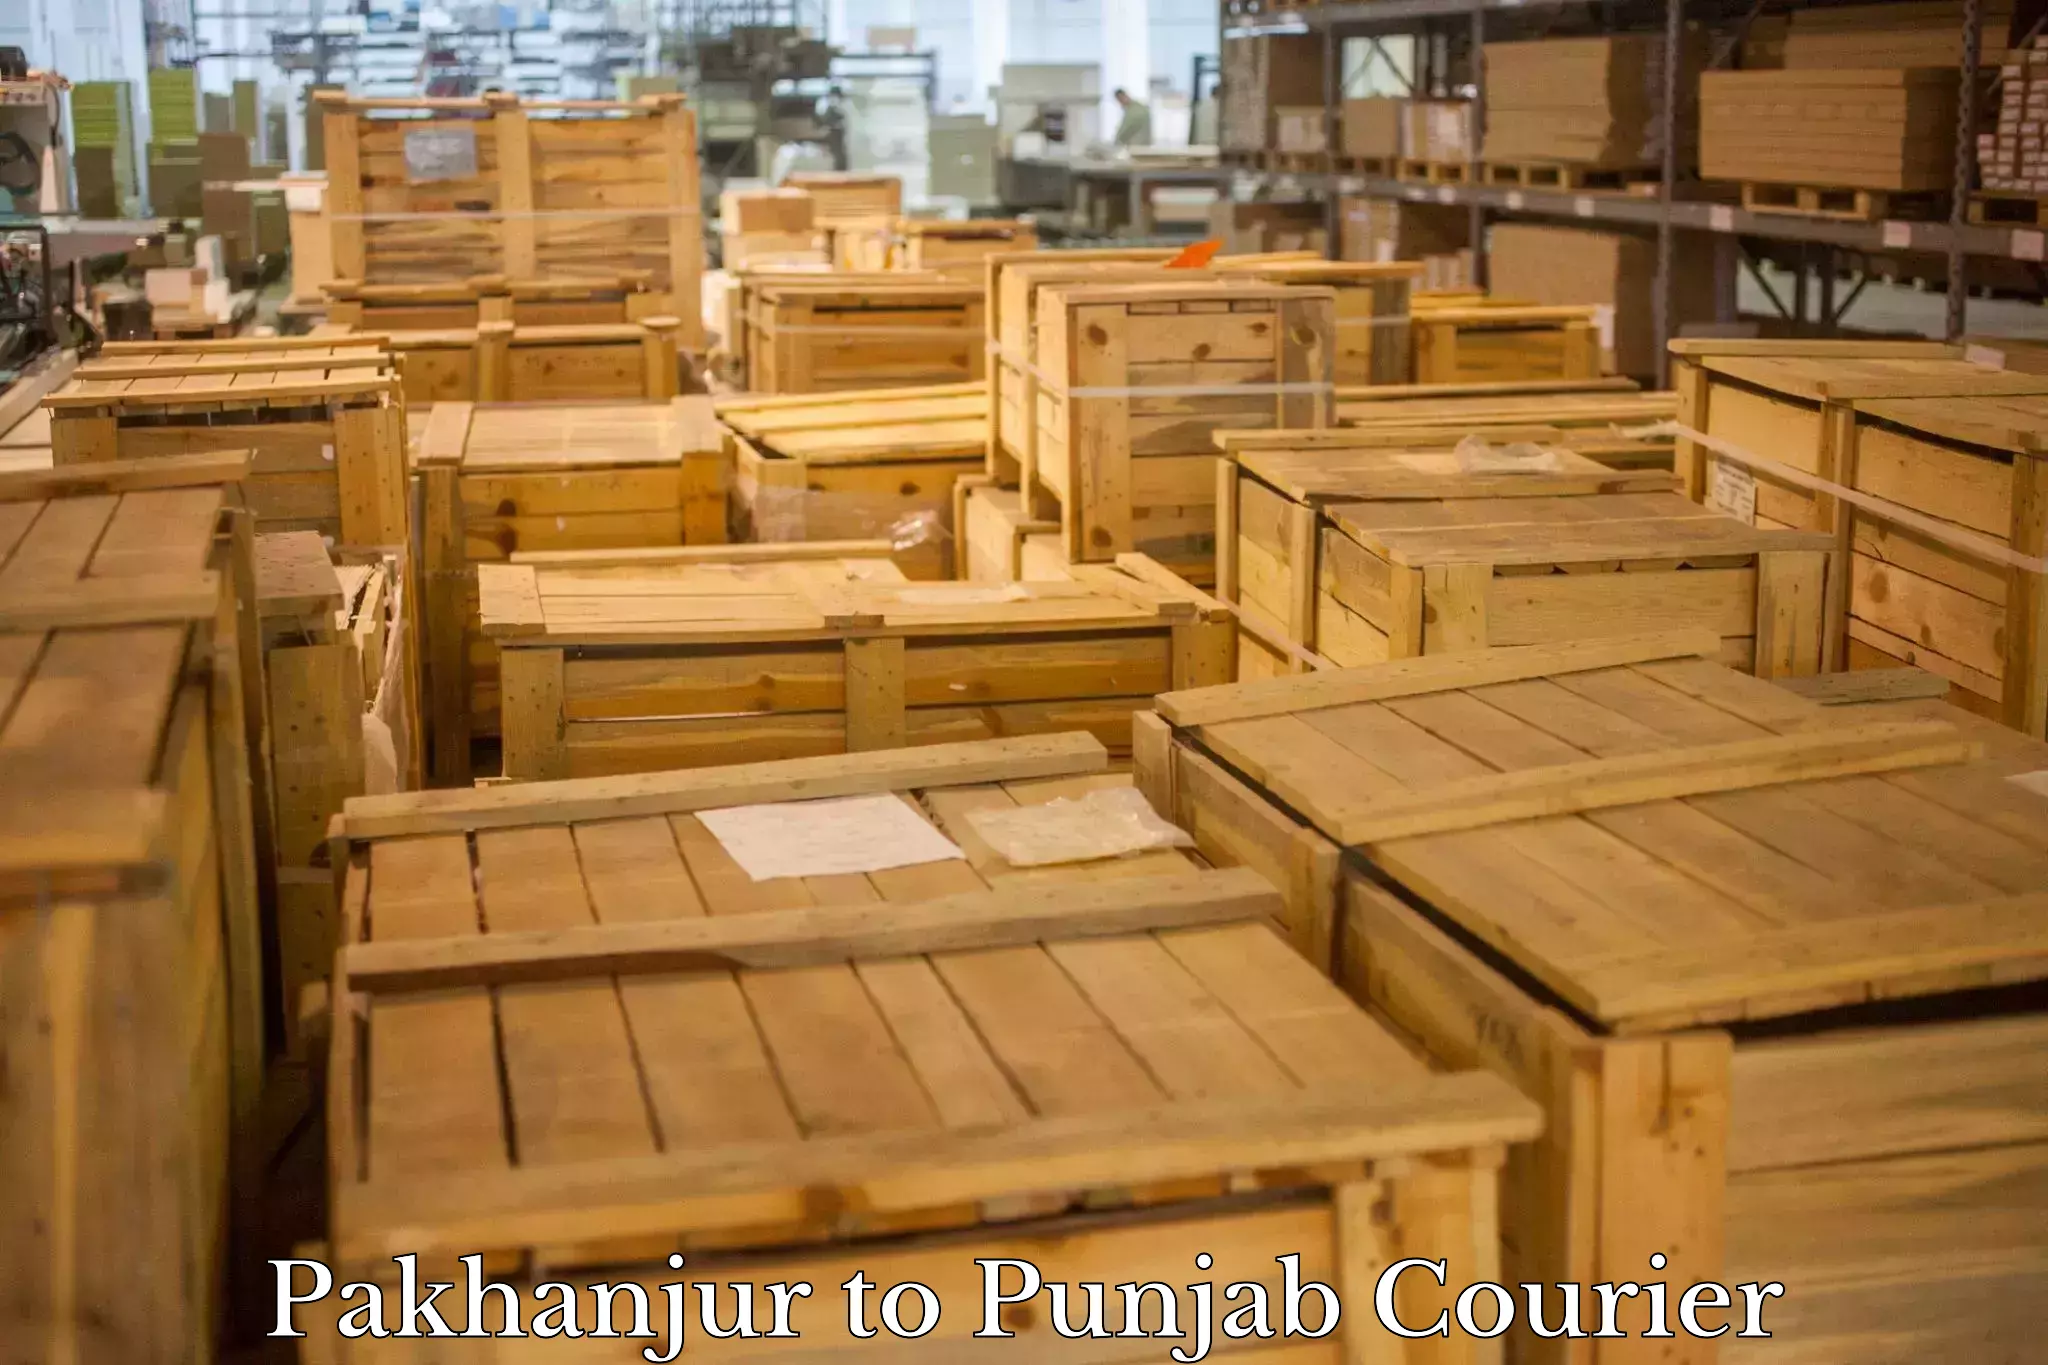 Customer-centric shipping Pakhanjur to Ludhiana